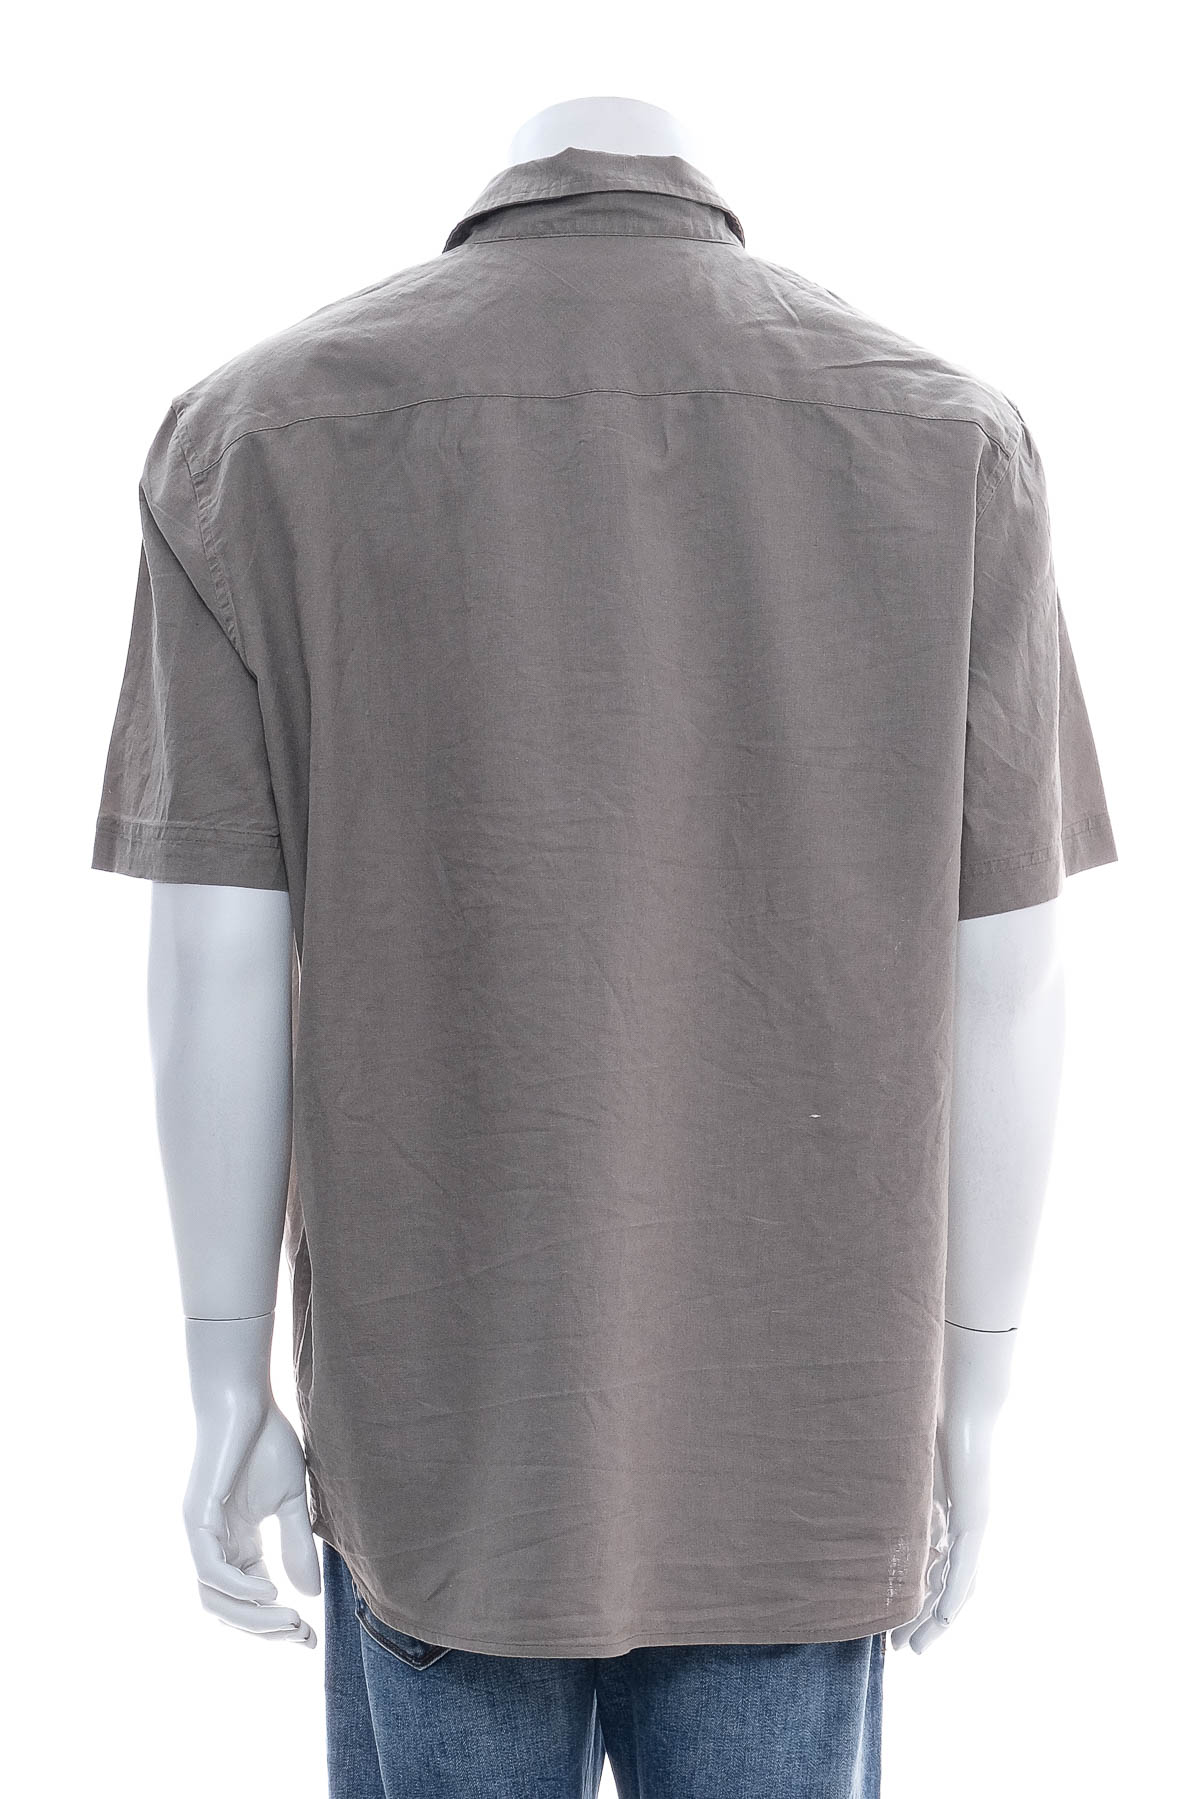 Men's shirt - Bpc Bonprix Collection - 1